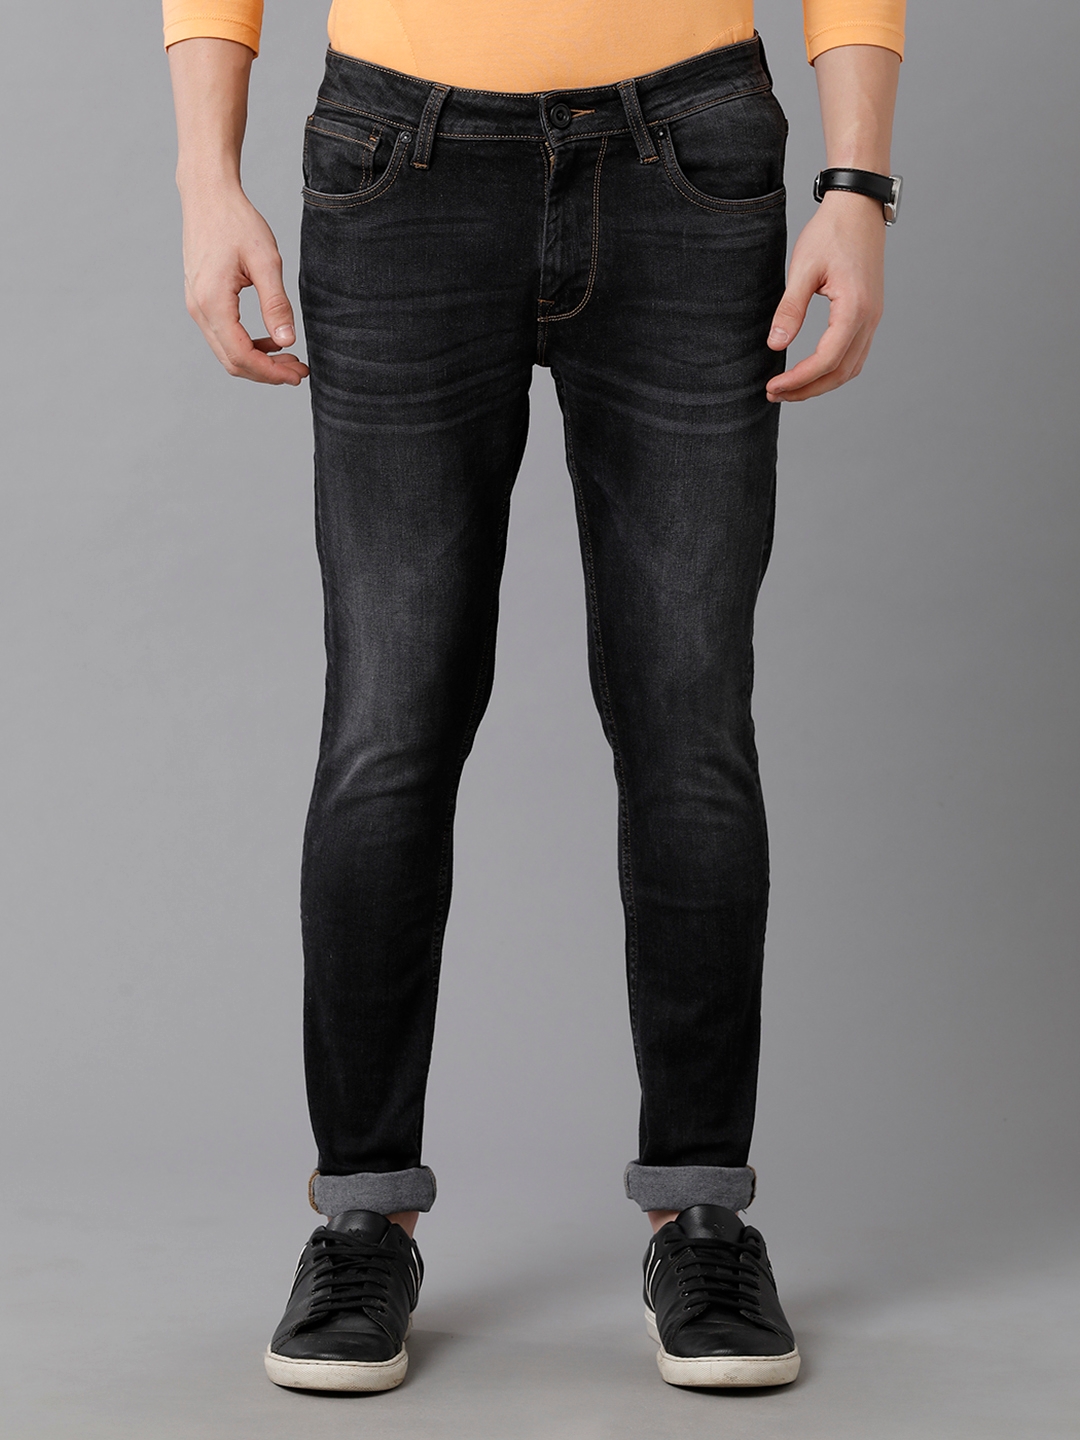 VOI JEANS Men's Solid Black Cotton Blend Skinny Fit Mid Rise Jeans